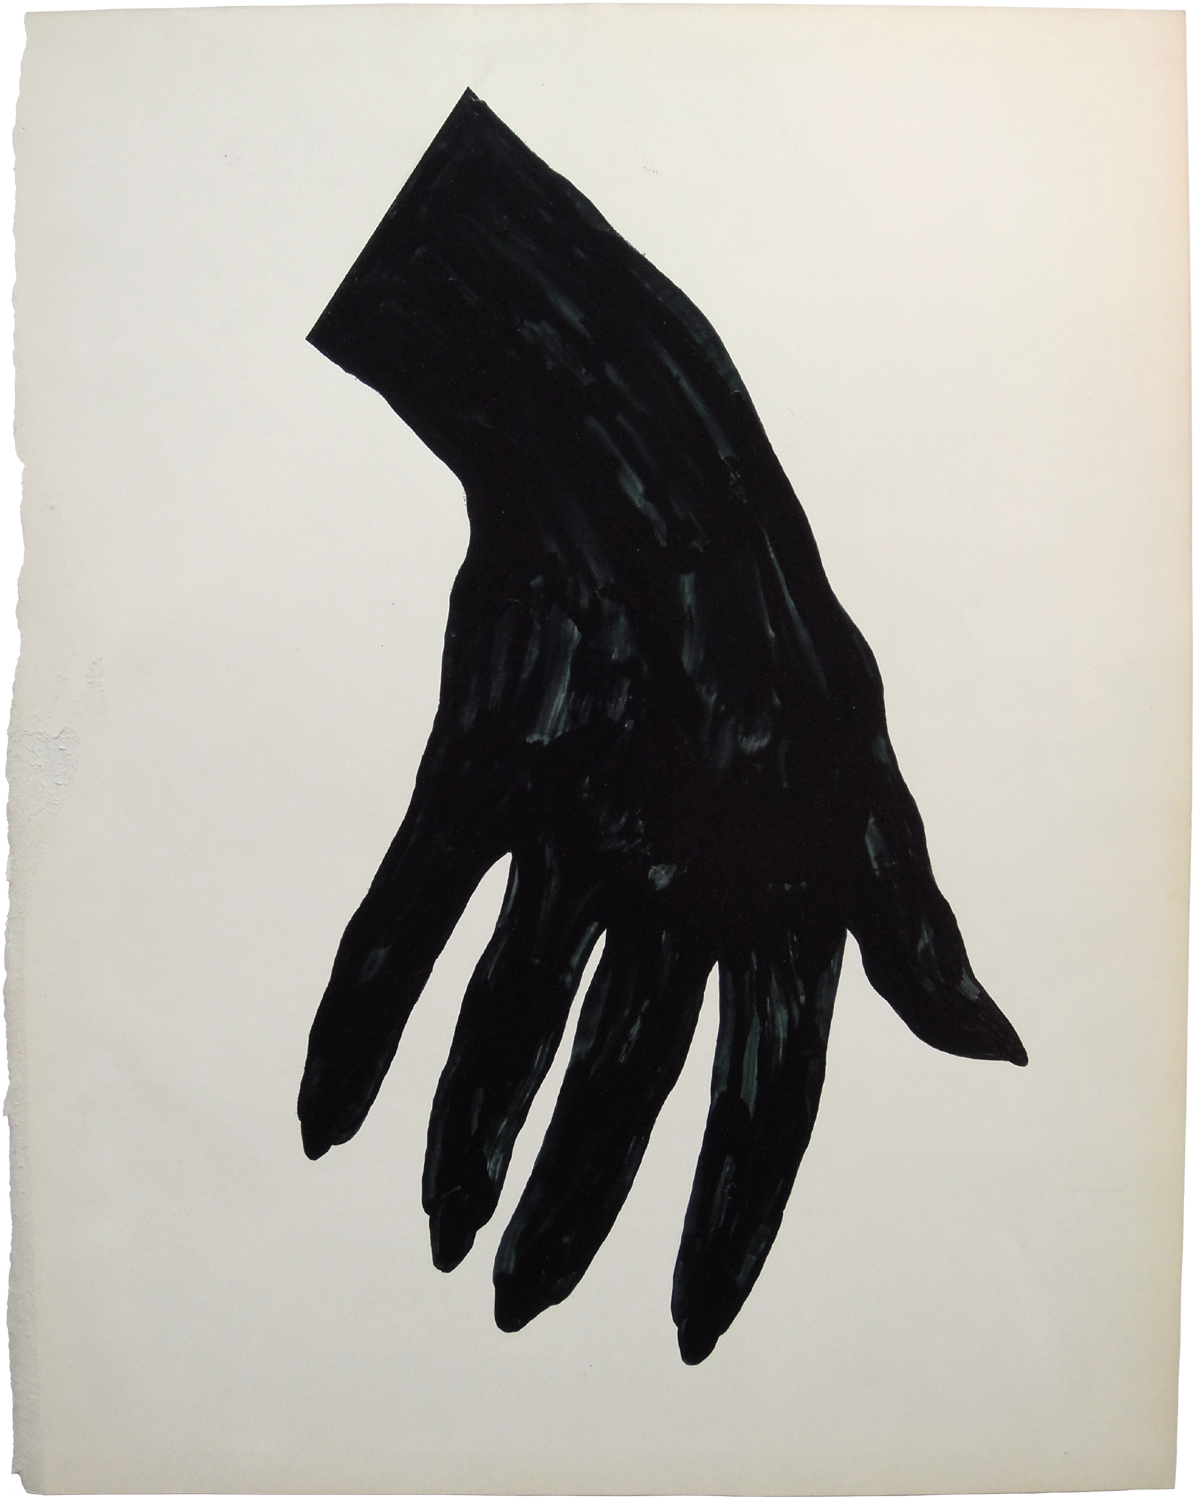  Black Nail Polish, 2013, nail polish on paper, 11" x 13". 